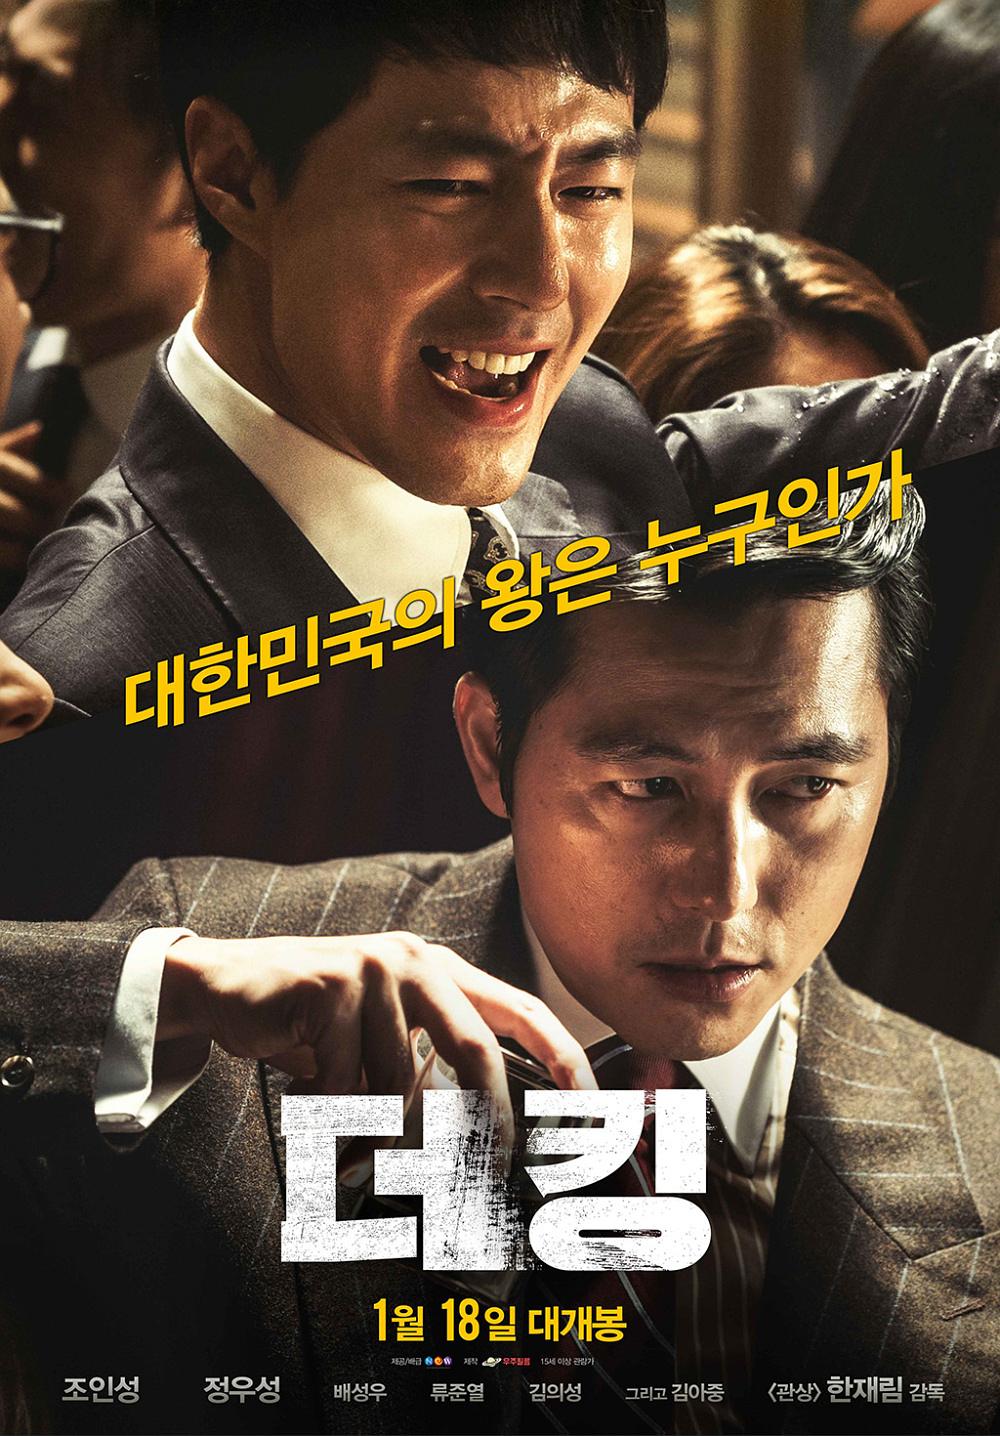  The.King.2017.KOREAN.1080p.BluRay.REMUX.AVC.DTS-HD.MA.TrueHD.7.1.Atmos-FGT 37-1.png